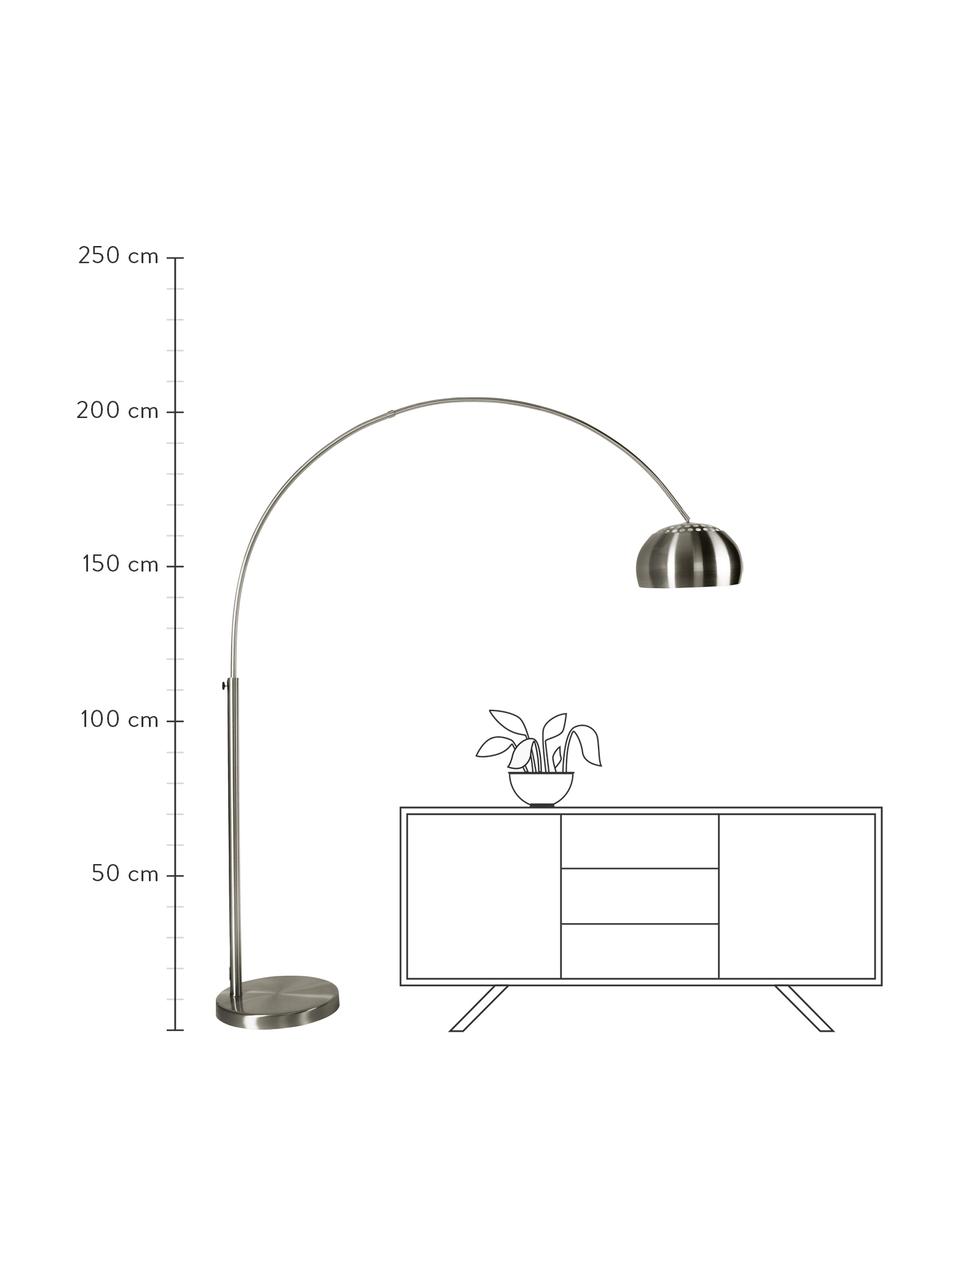 Velká oblouková lampa Metal Bow, Kov, Š 170 cm, V 205 cm